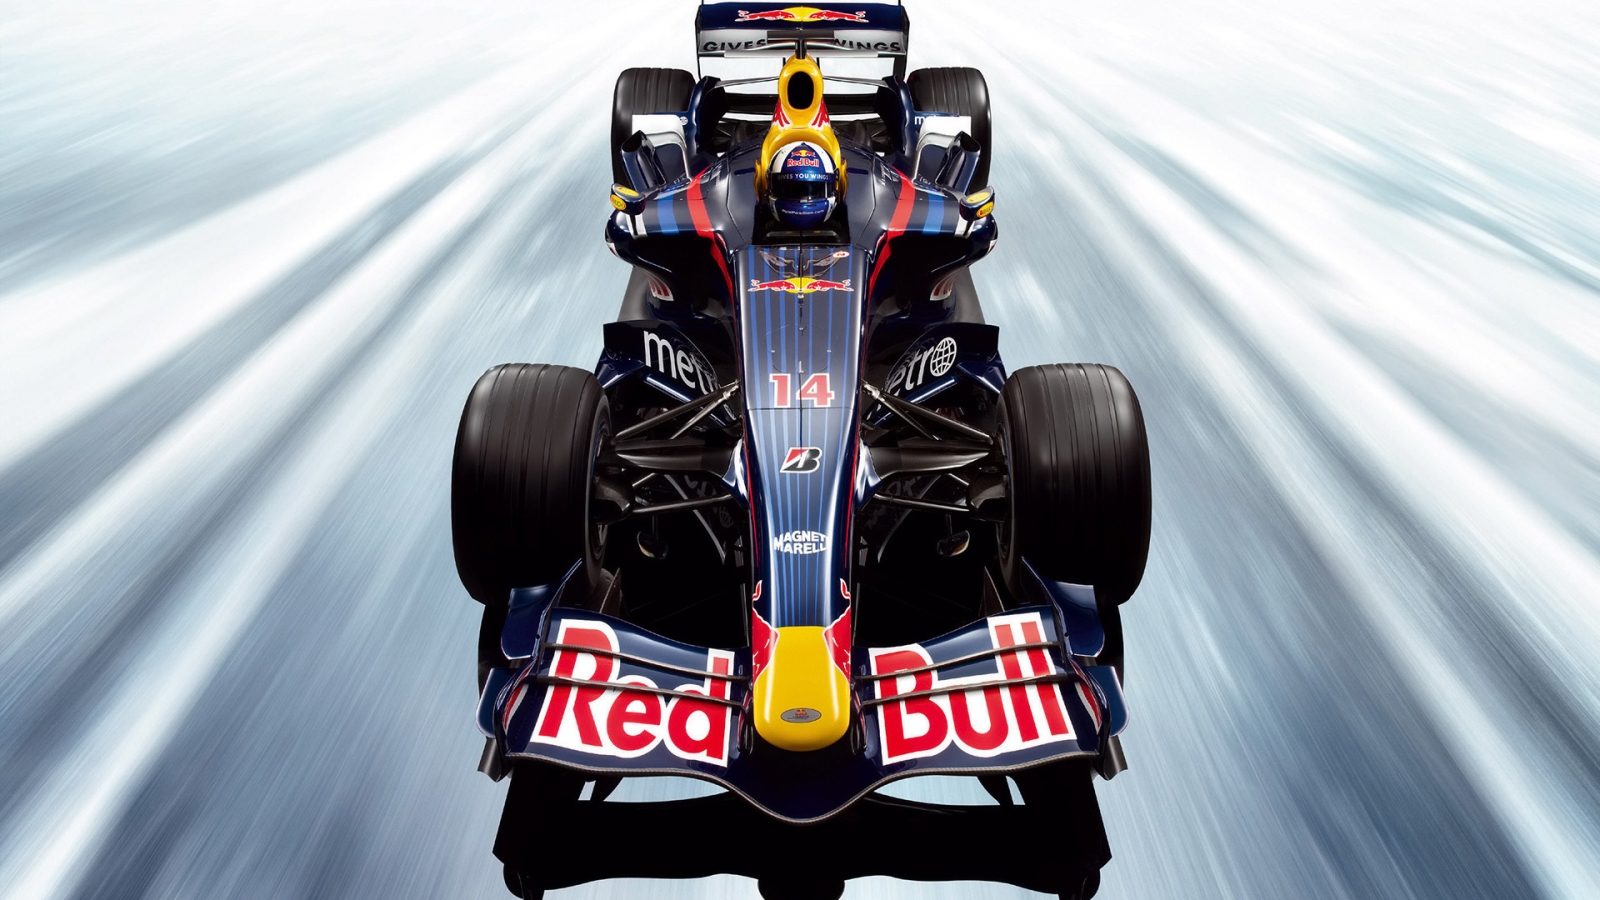 Red Bull RB3 F1 Studio Front for 1600 x 900 HDTV resolution